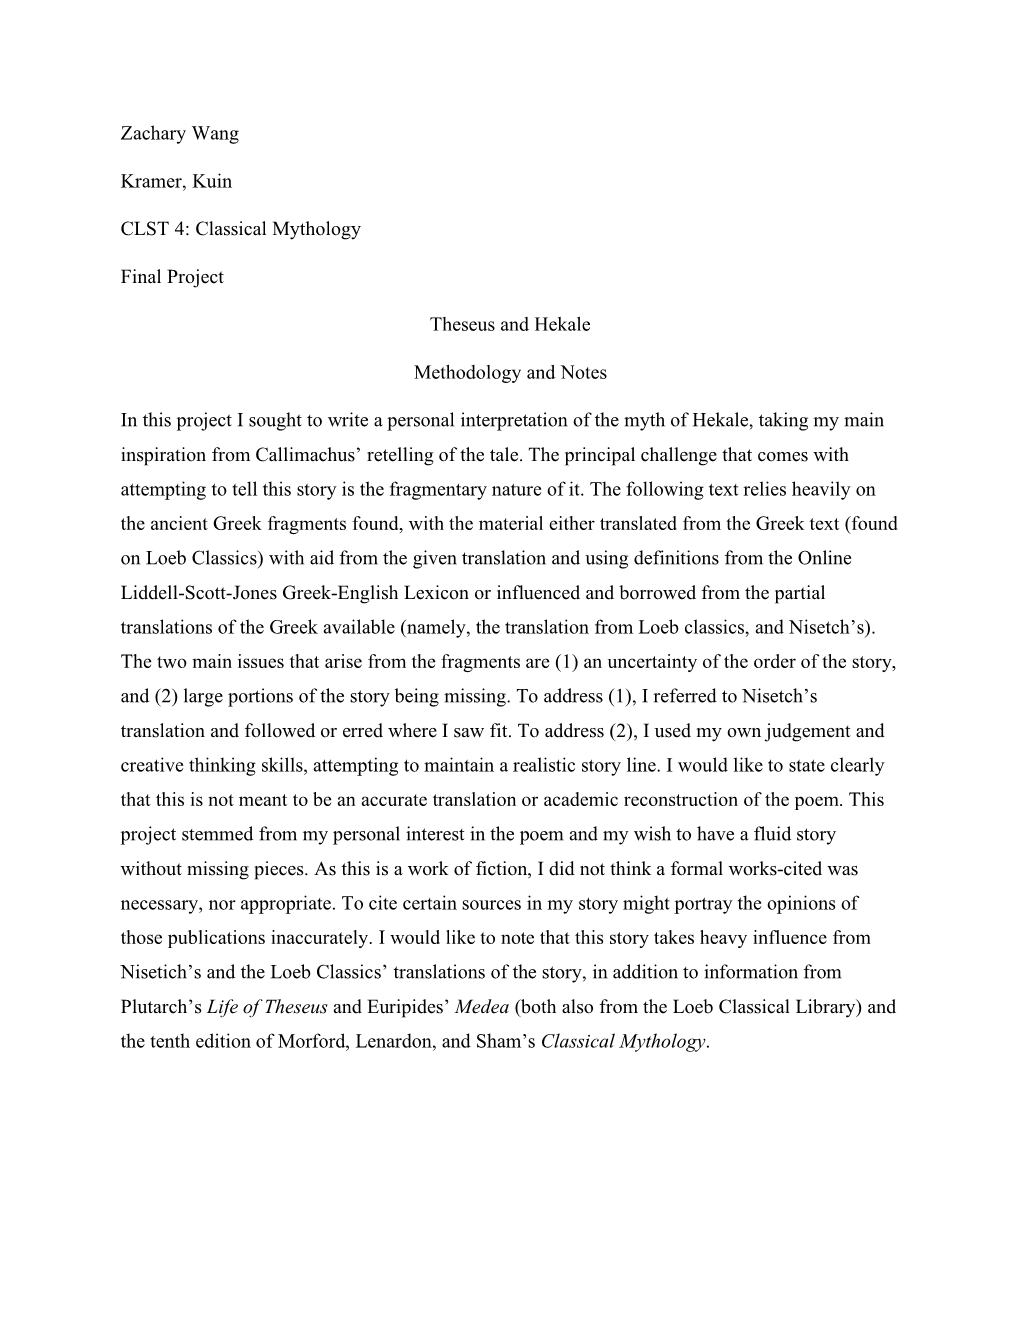 Zachary Wang Kramer, Kuin CLST 4: Classical Mythology Final Project